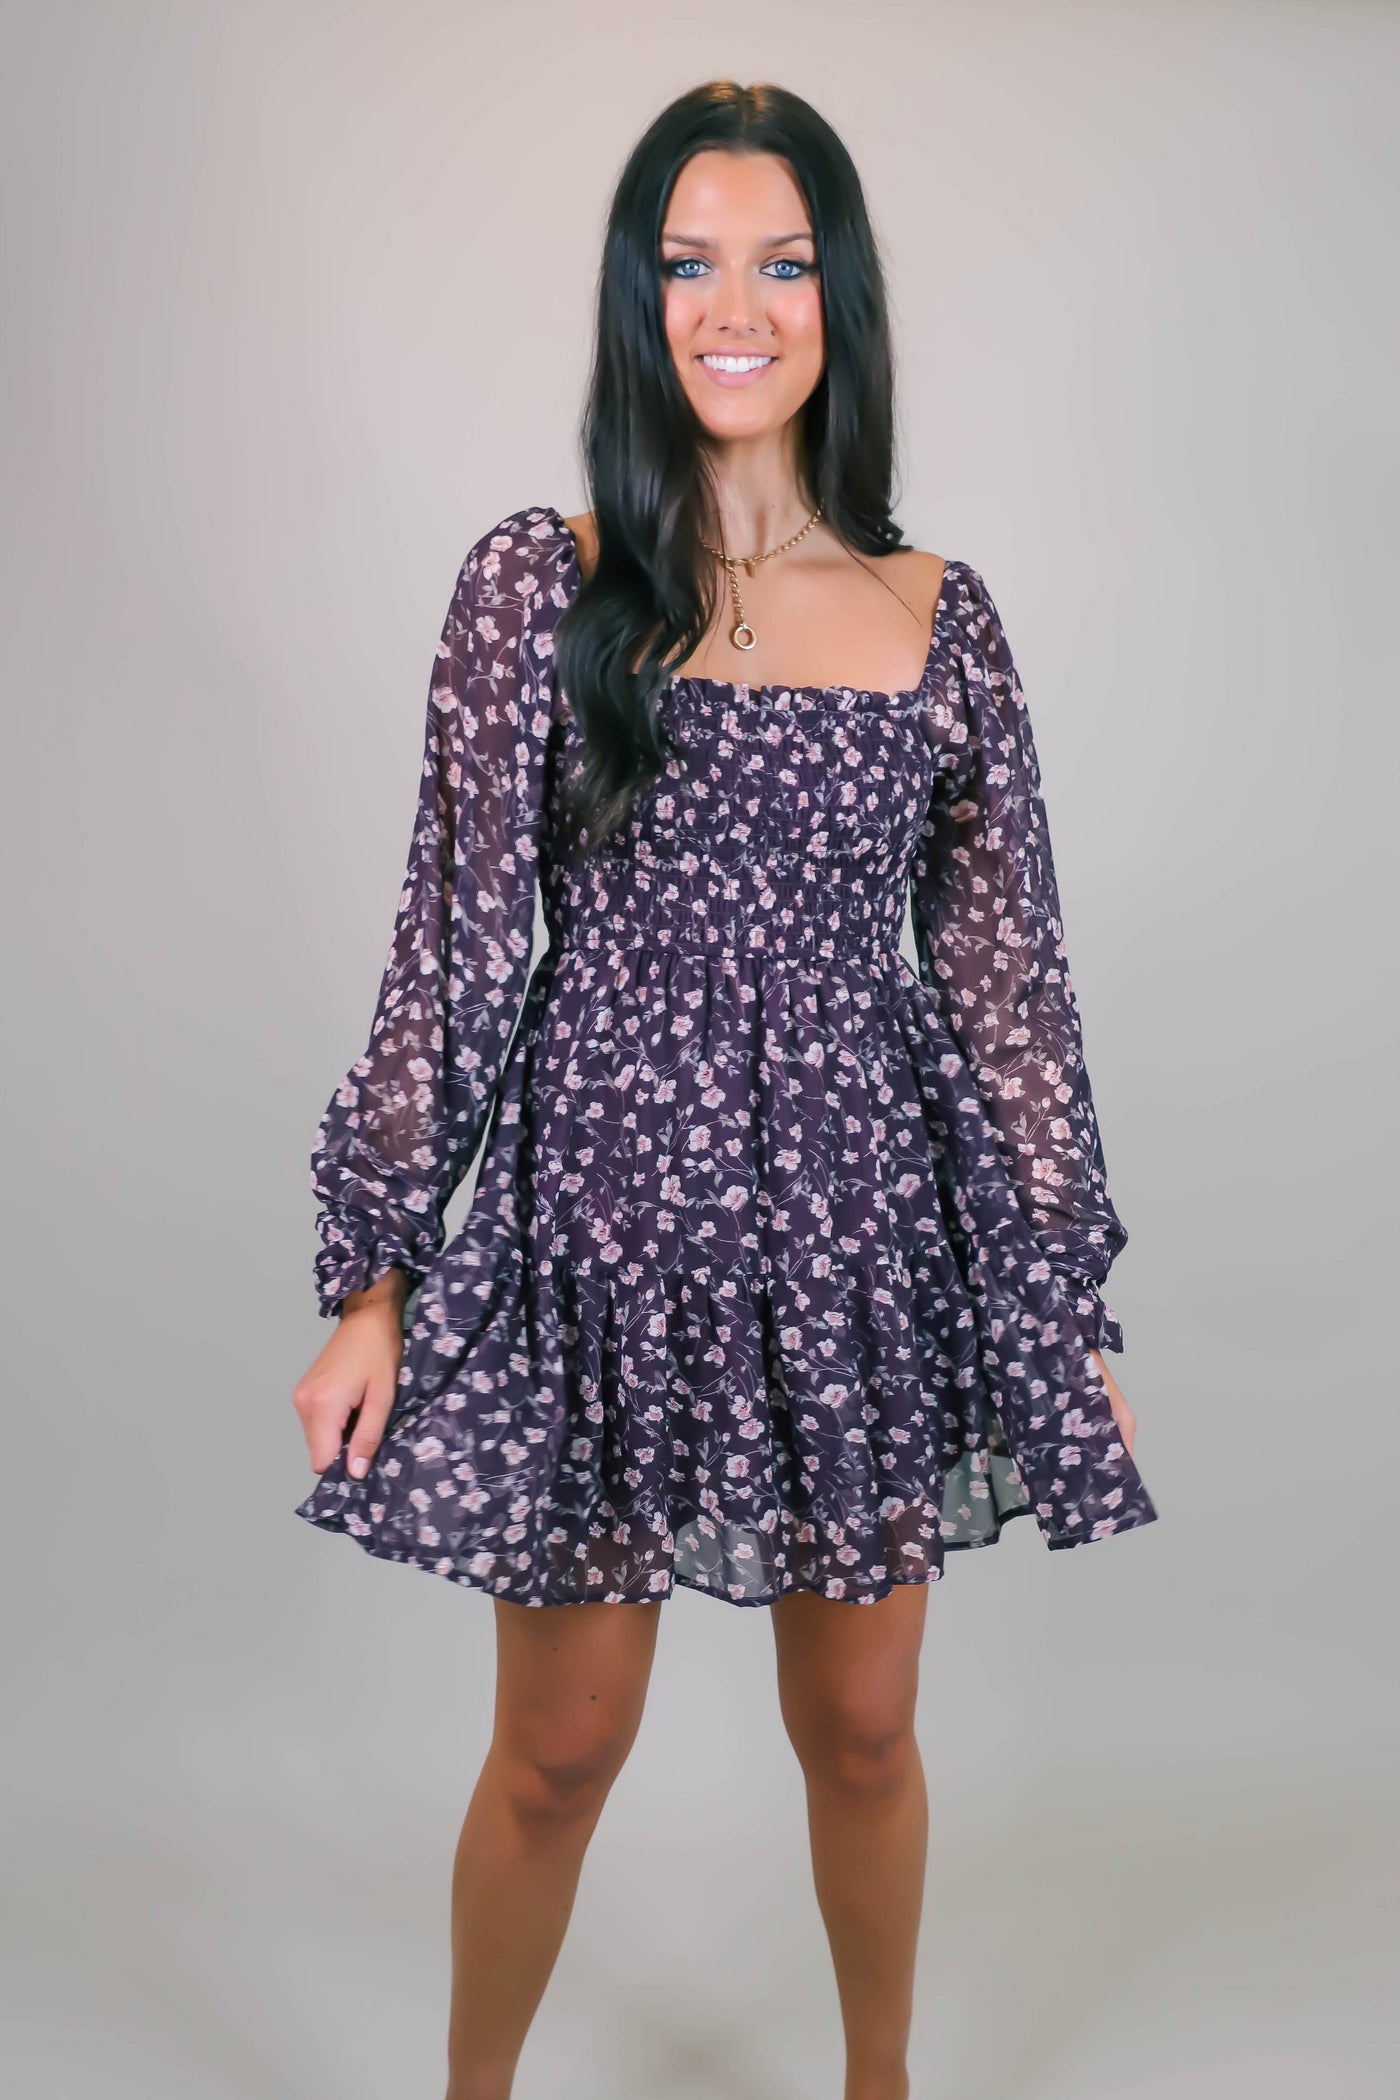 Purple Floral Print Dress- Women's Dress with Elastic Waist- Cute and Comfortable Women's Dresses